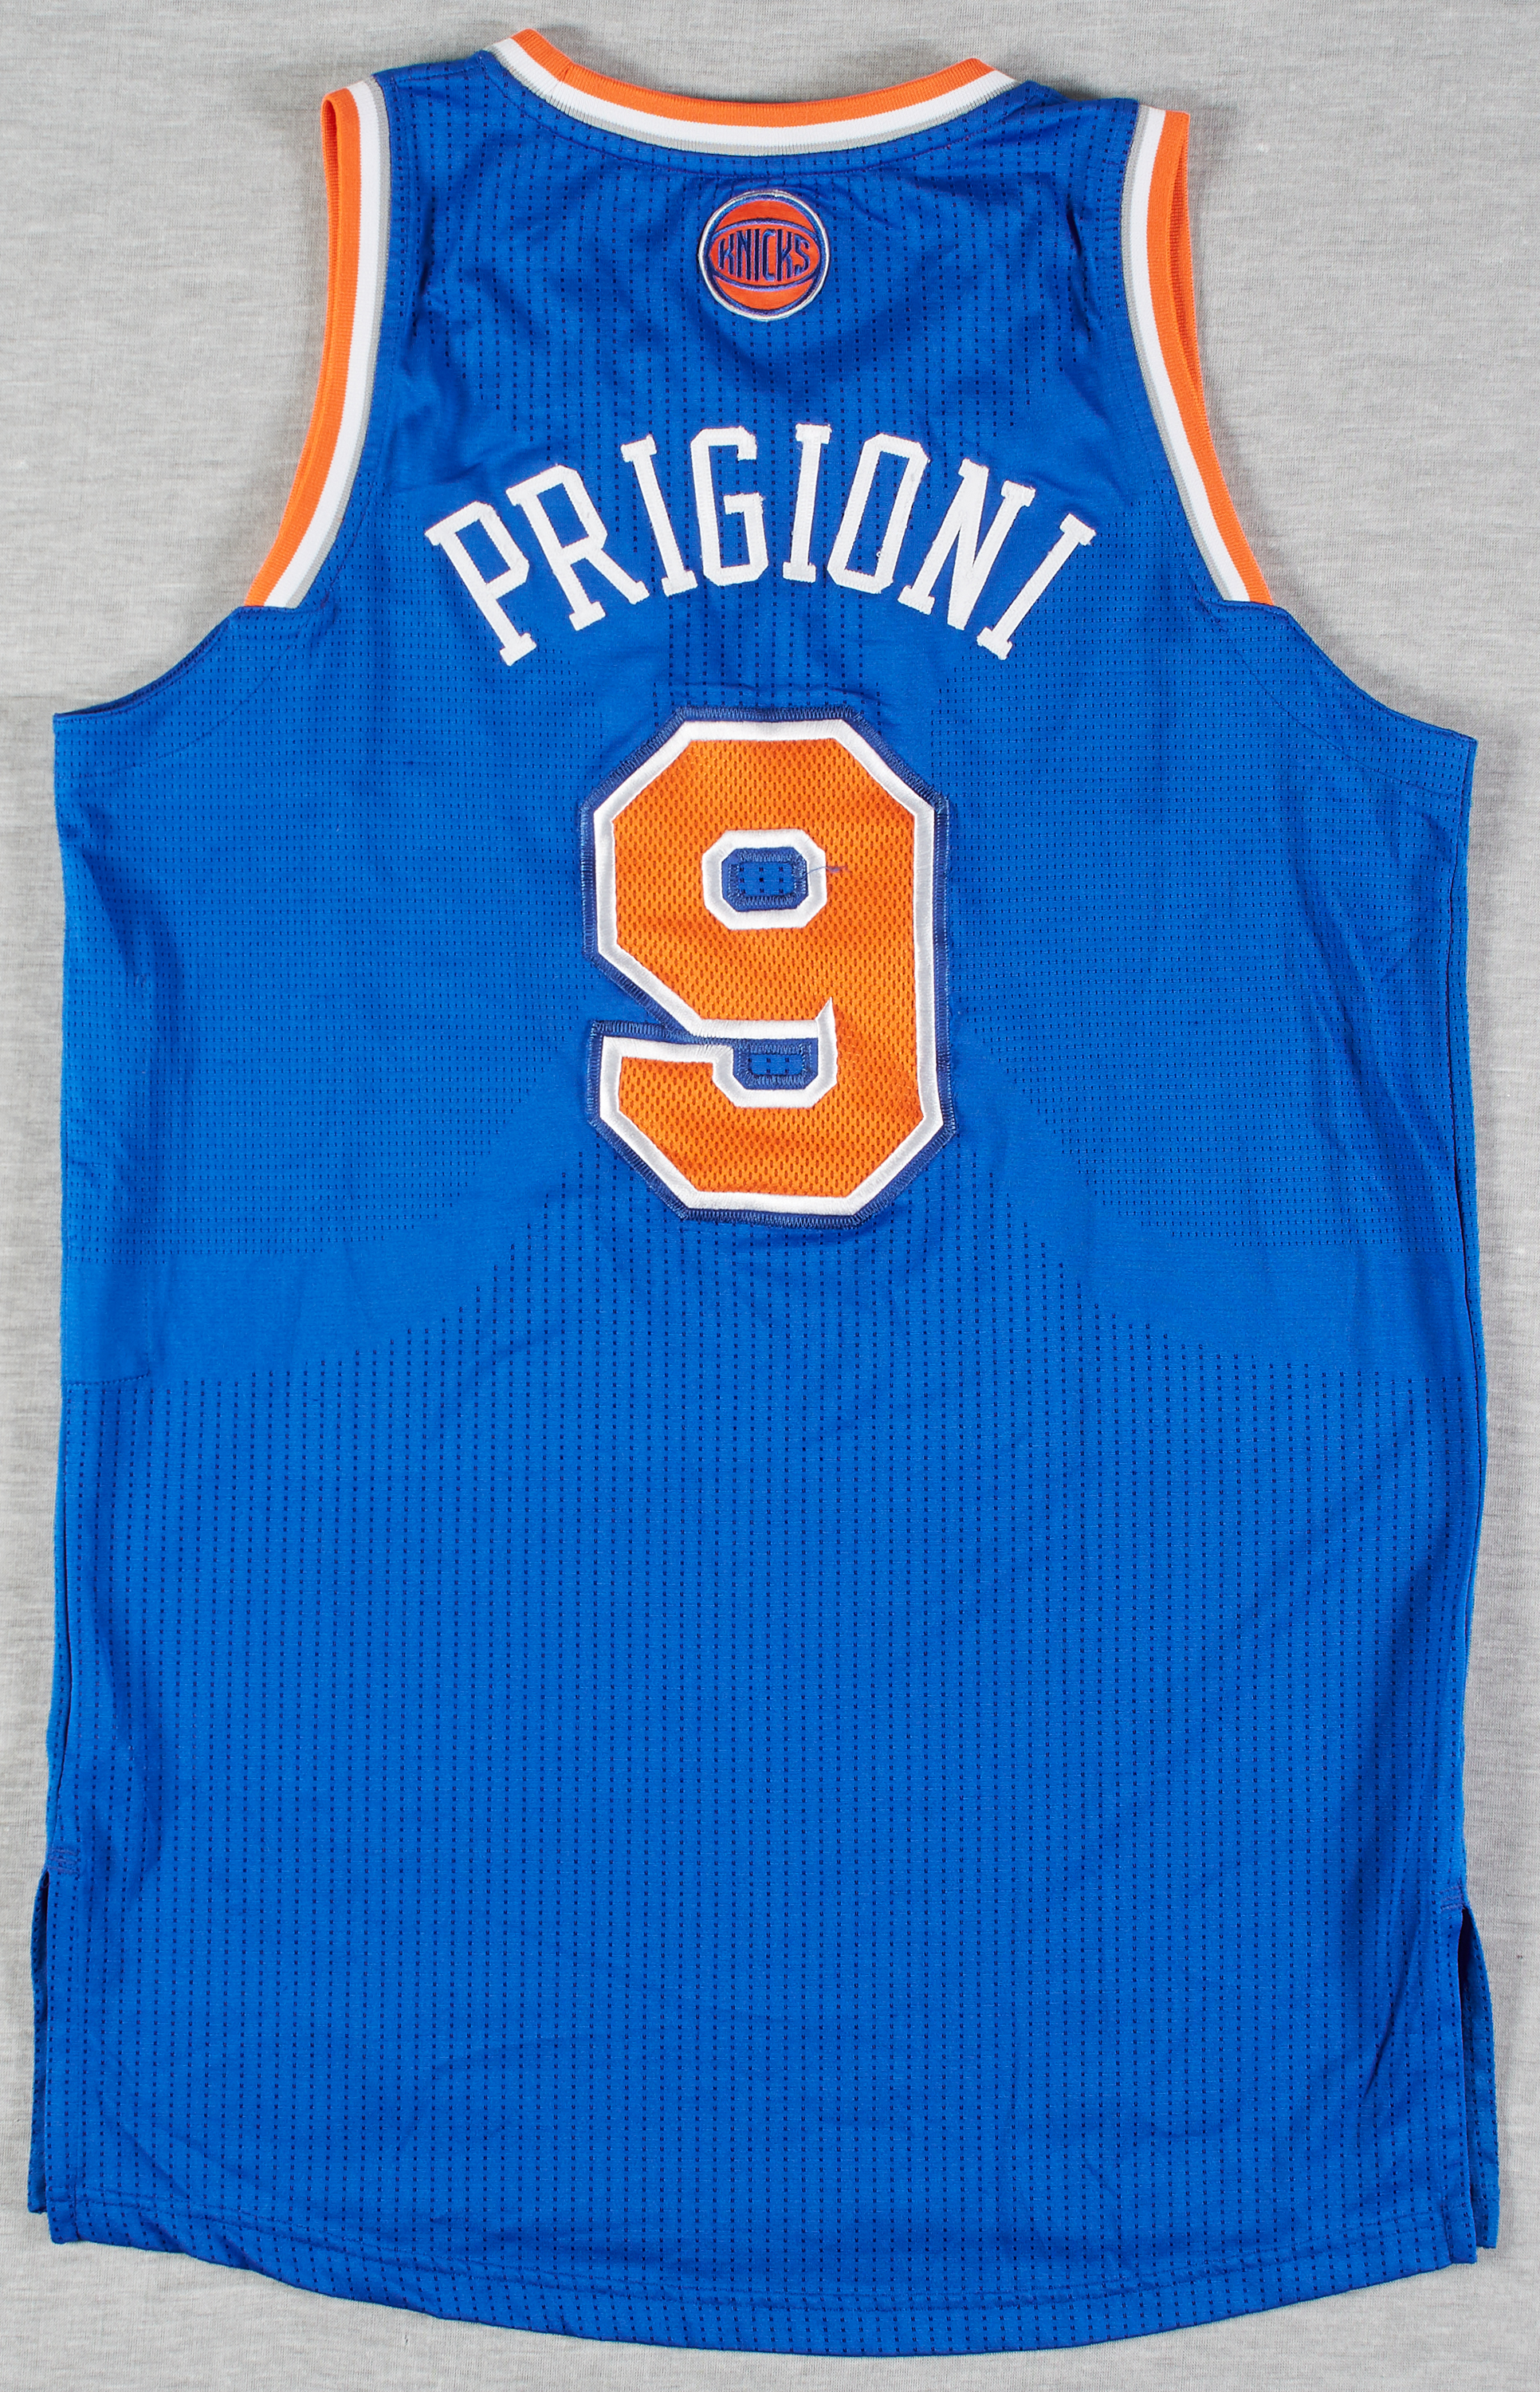 Pablo Prigioni Archives - The Knicks Wall